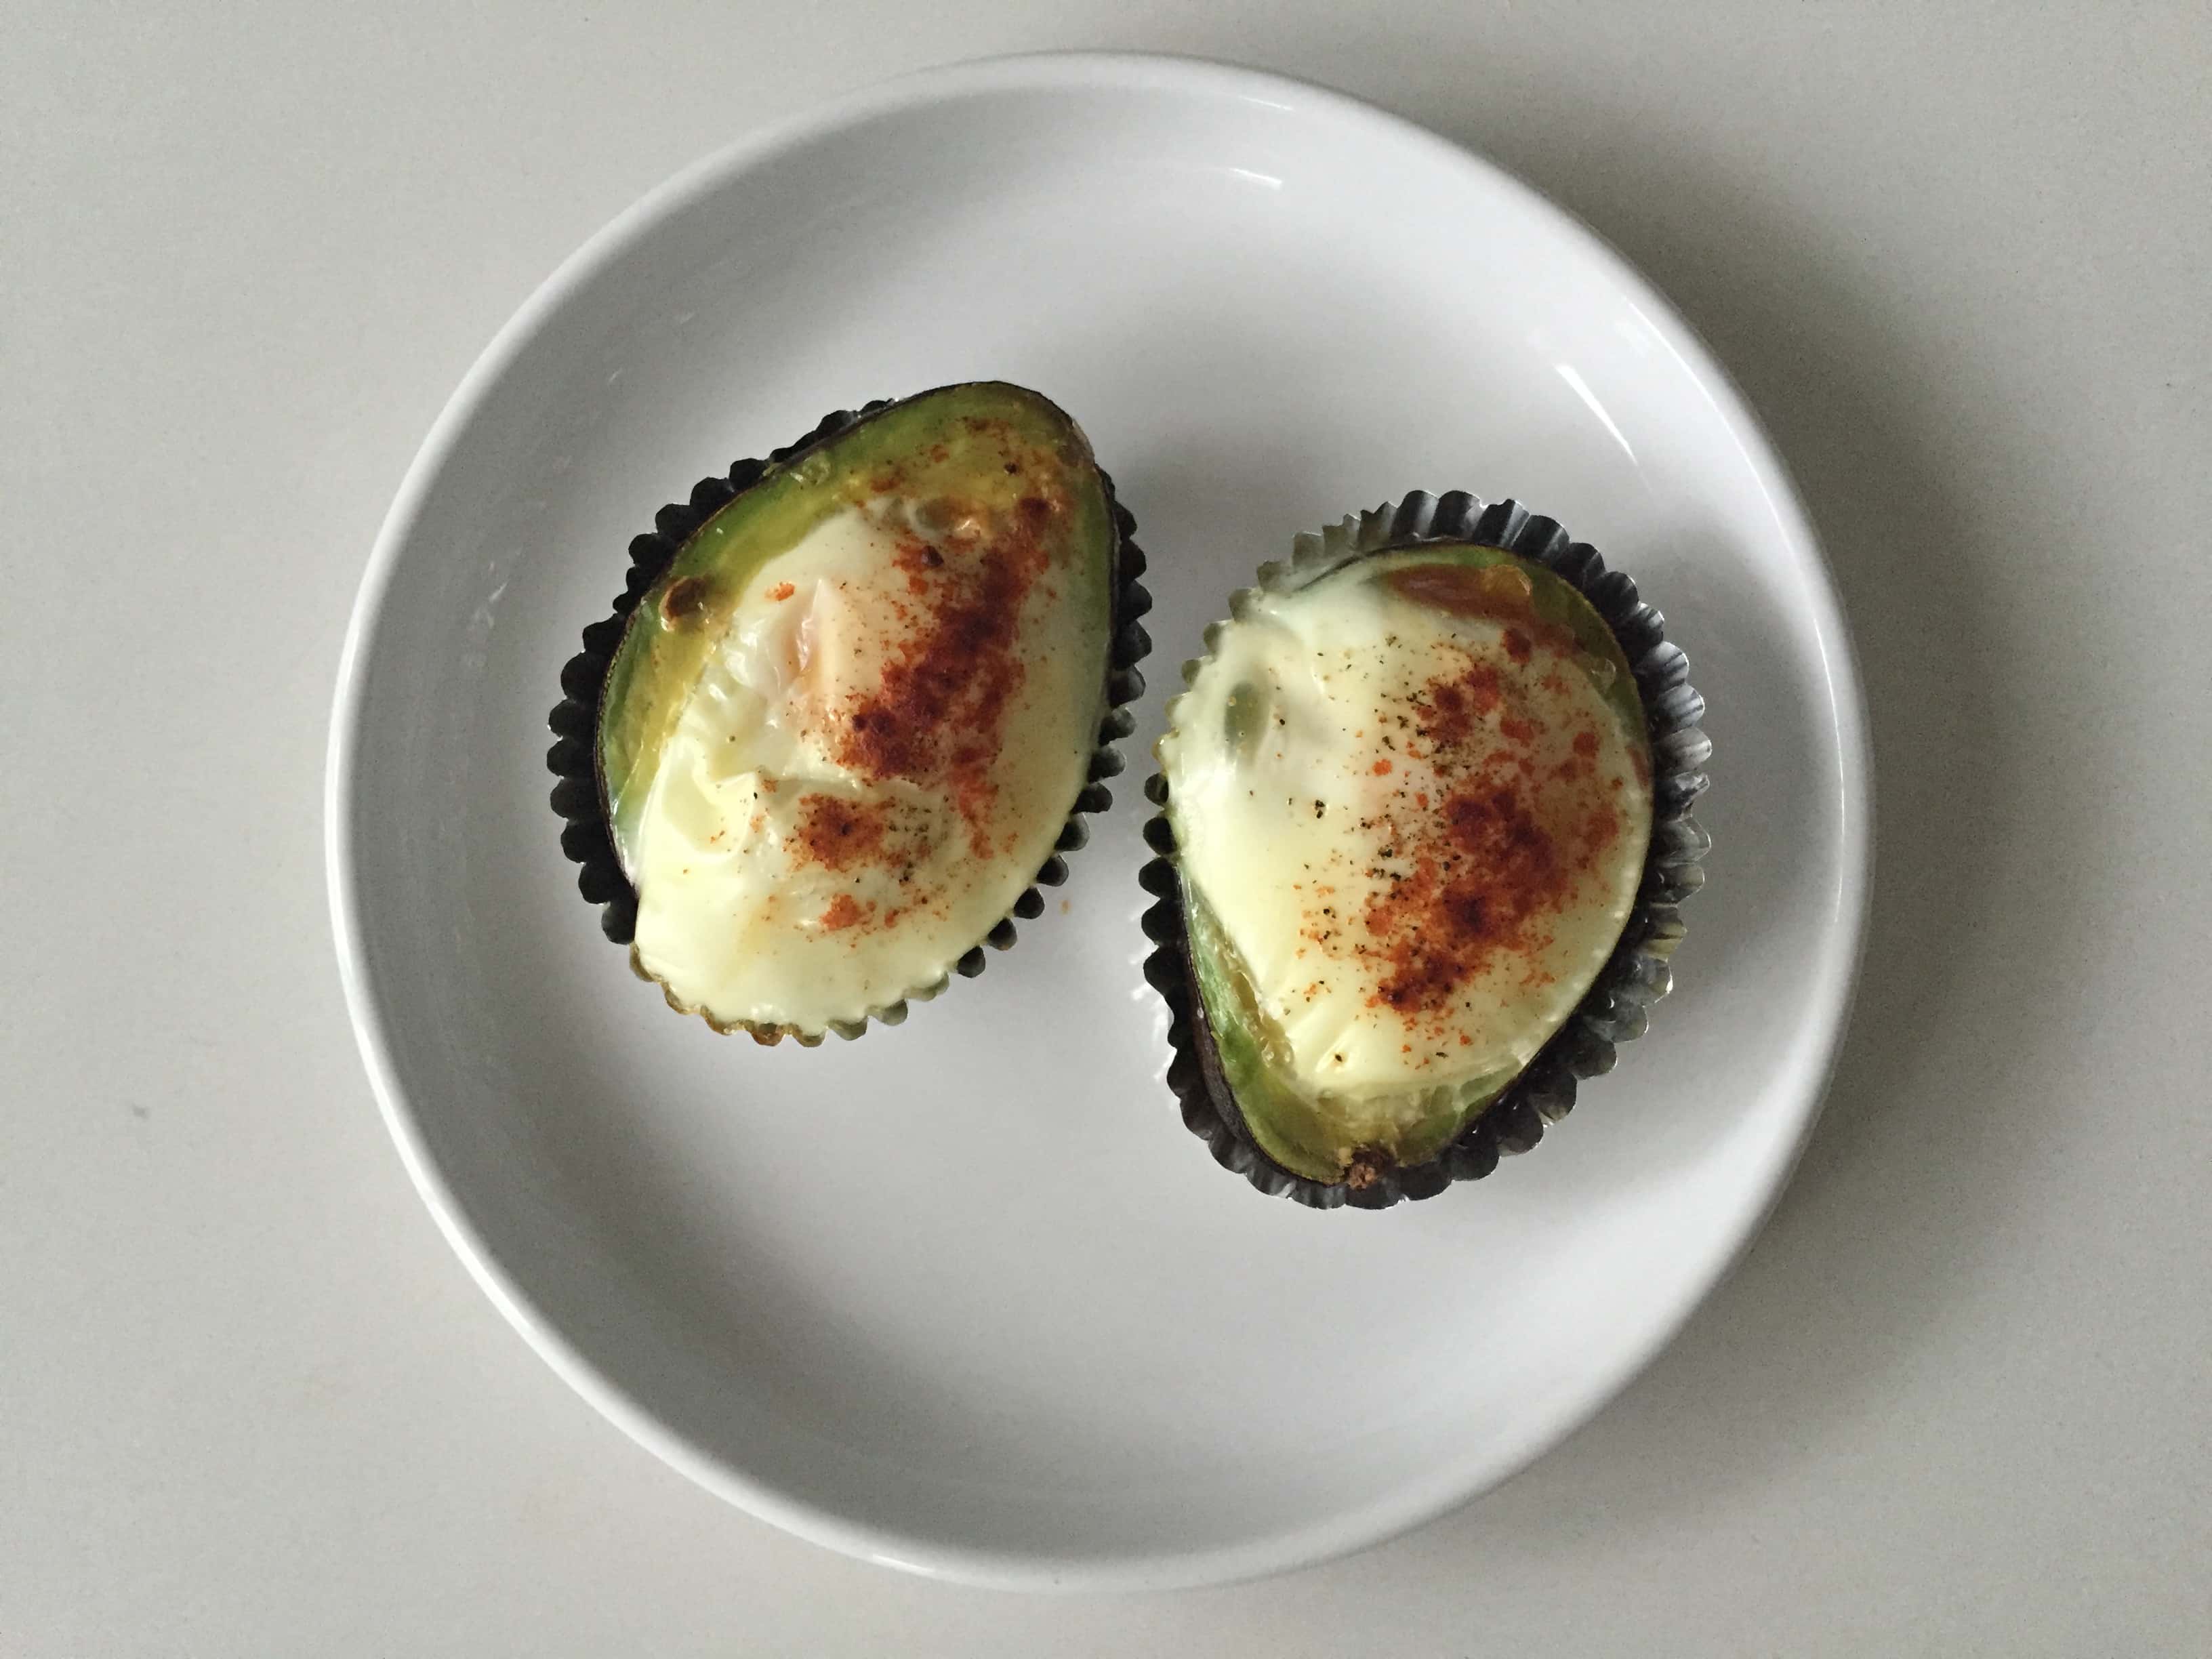 Healthy gluten-free recipe: baked avocado and eggs